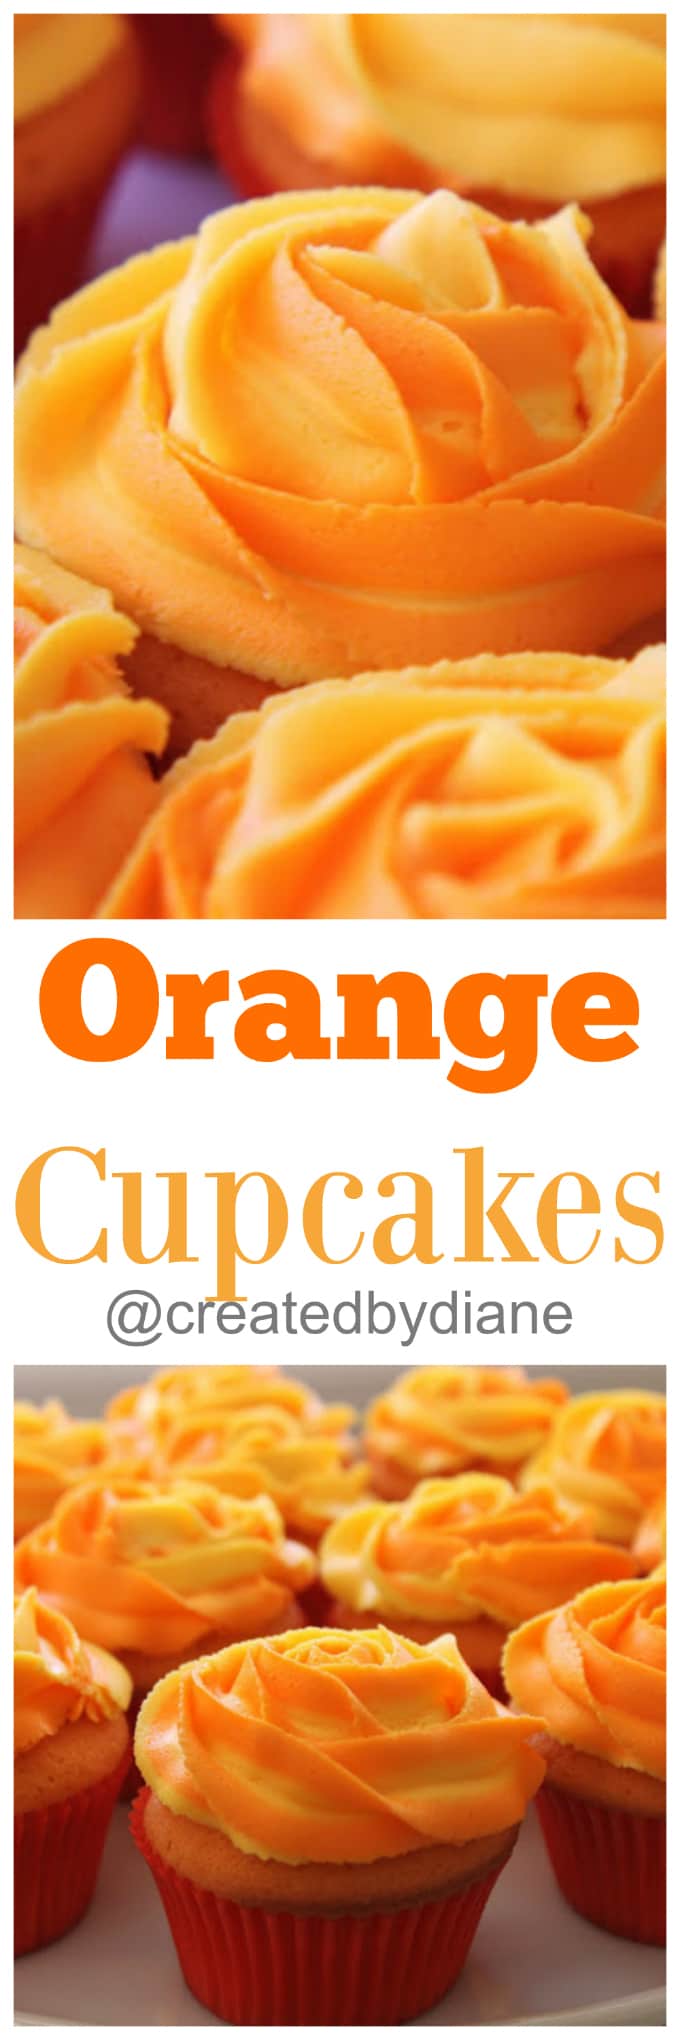 orange cupcakes @createdbydiane